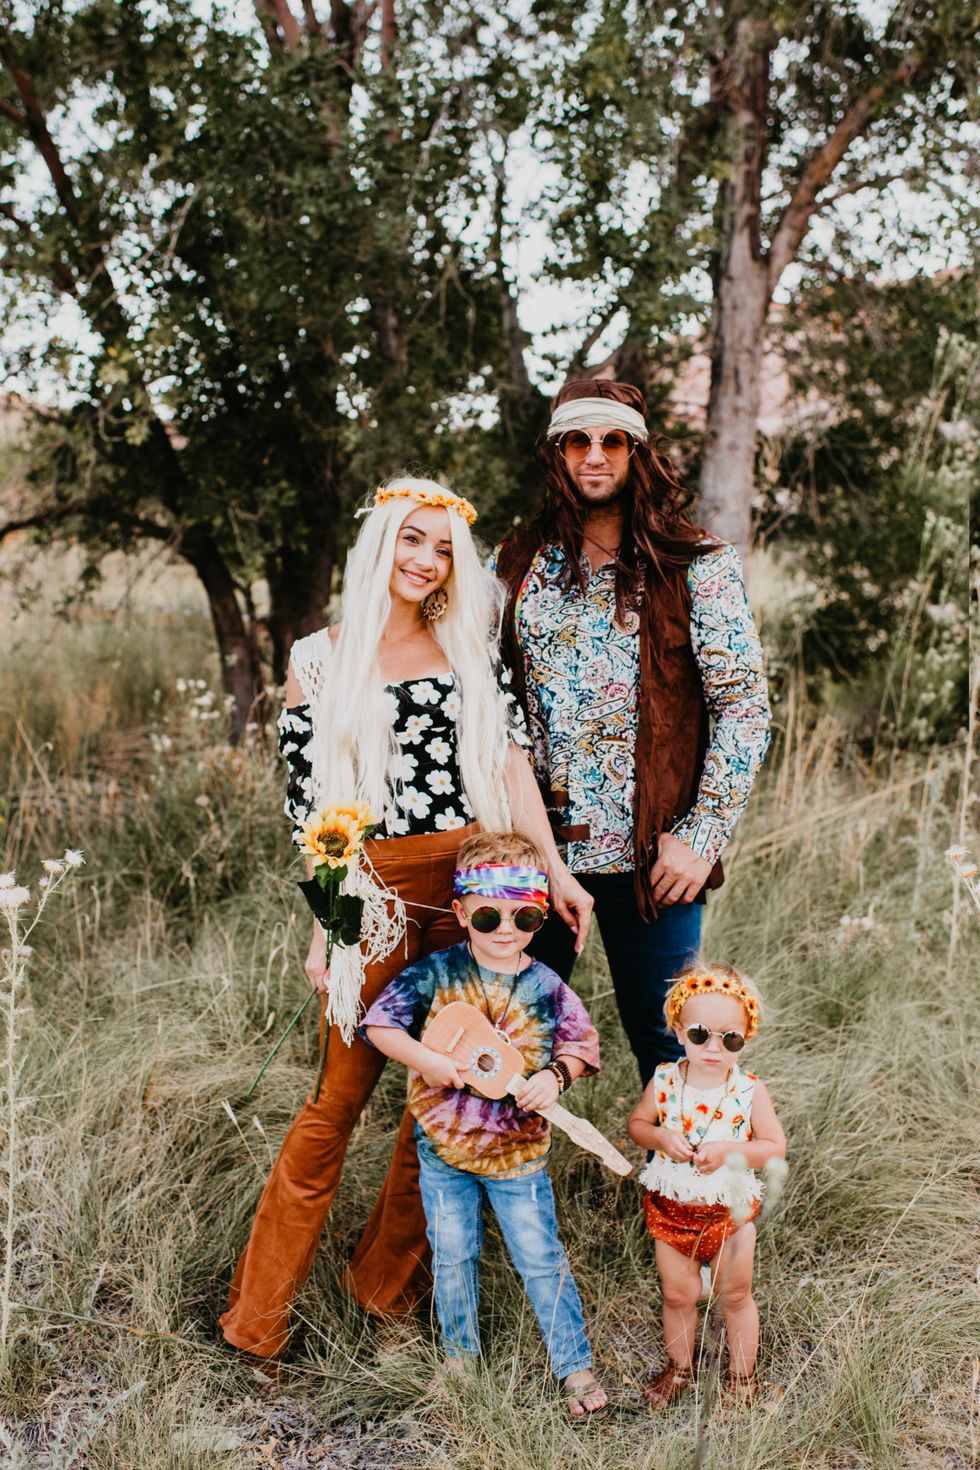 Hippie Man Brown Groovy 70s Men Costume Party Fancy Dress